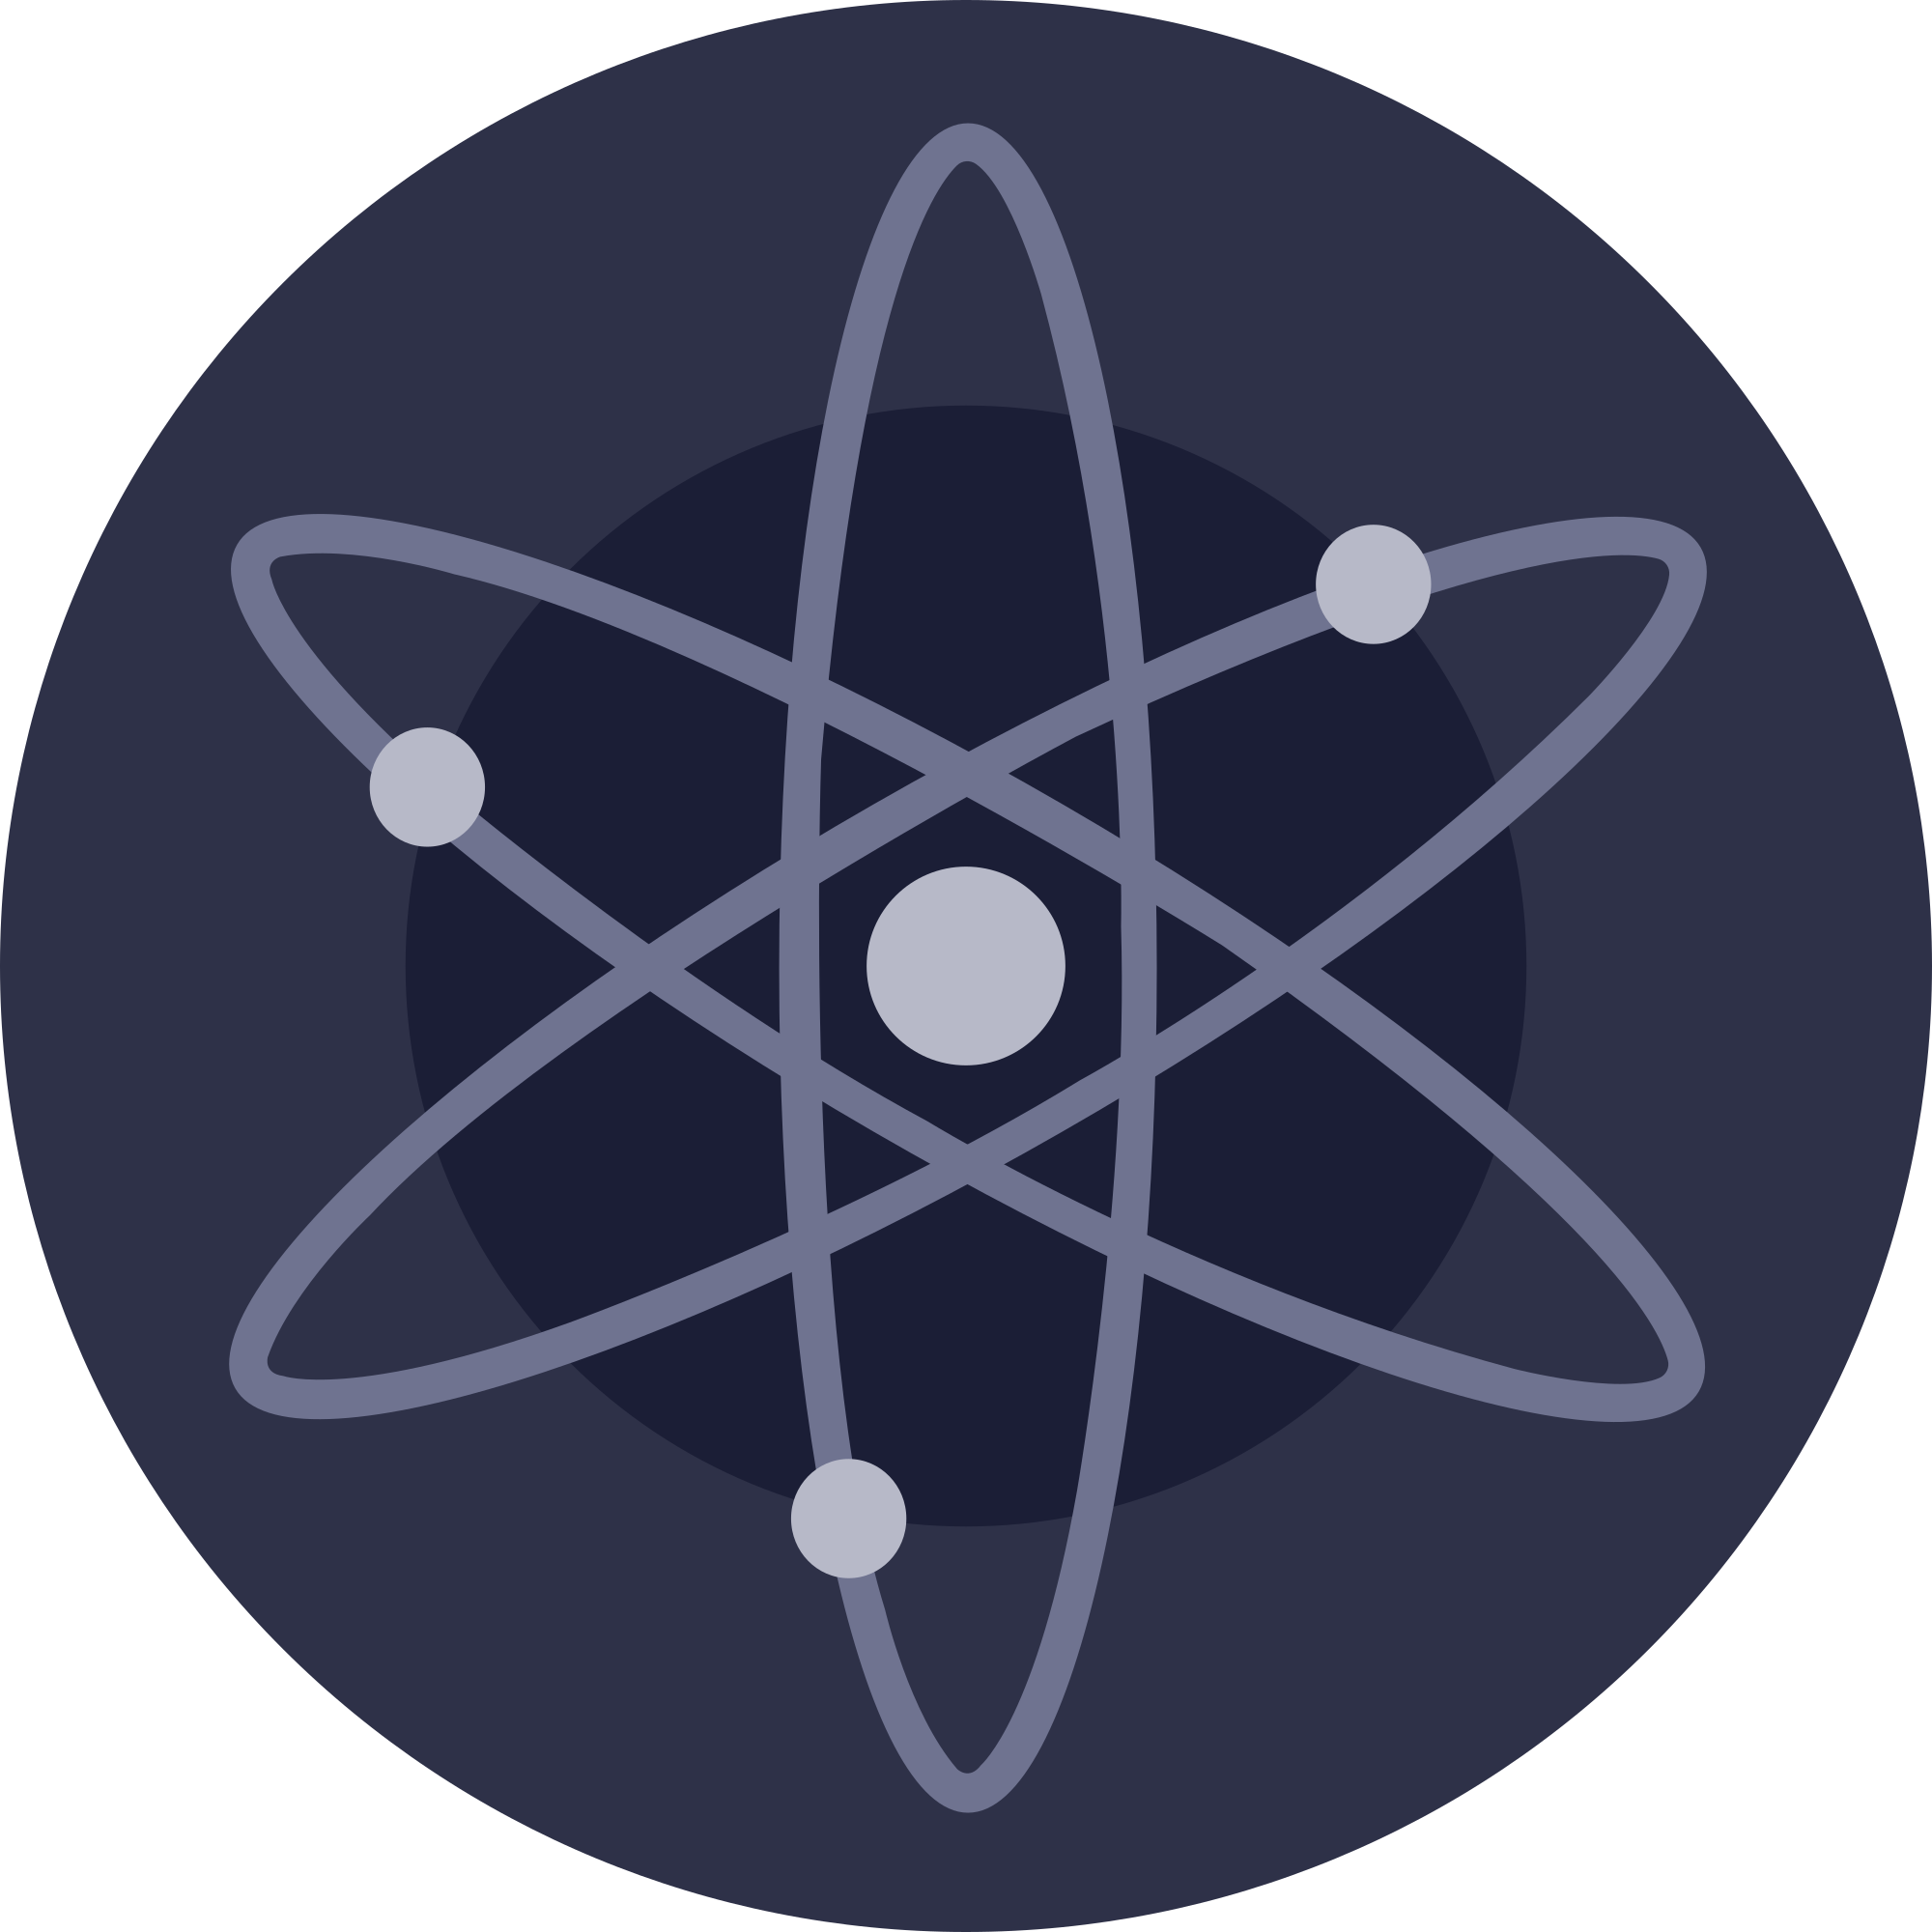 An image of the Cosmos logo.